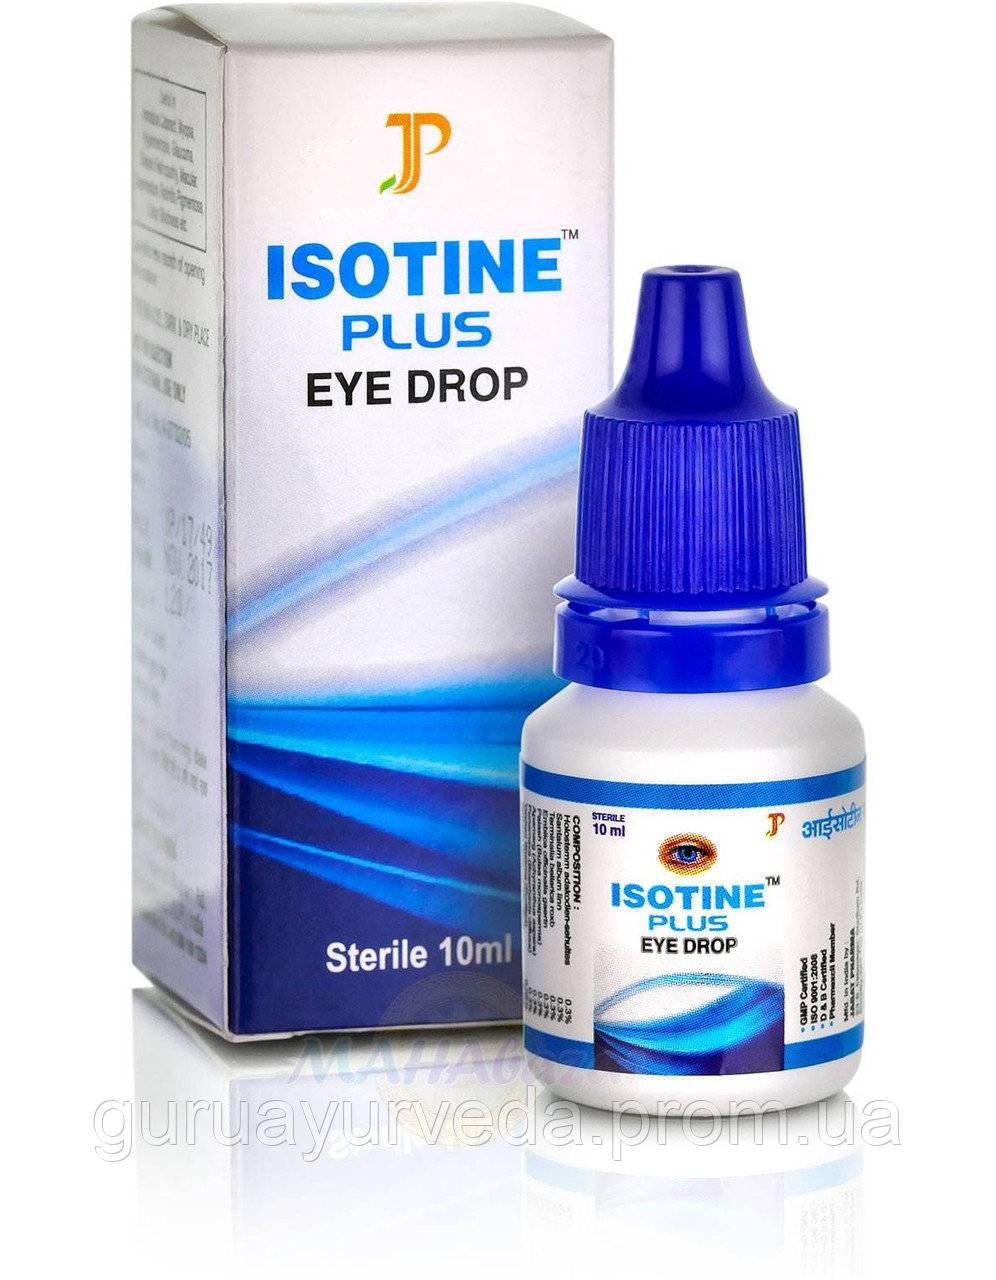 Айсотин (isotine eye drop) отзывы